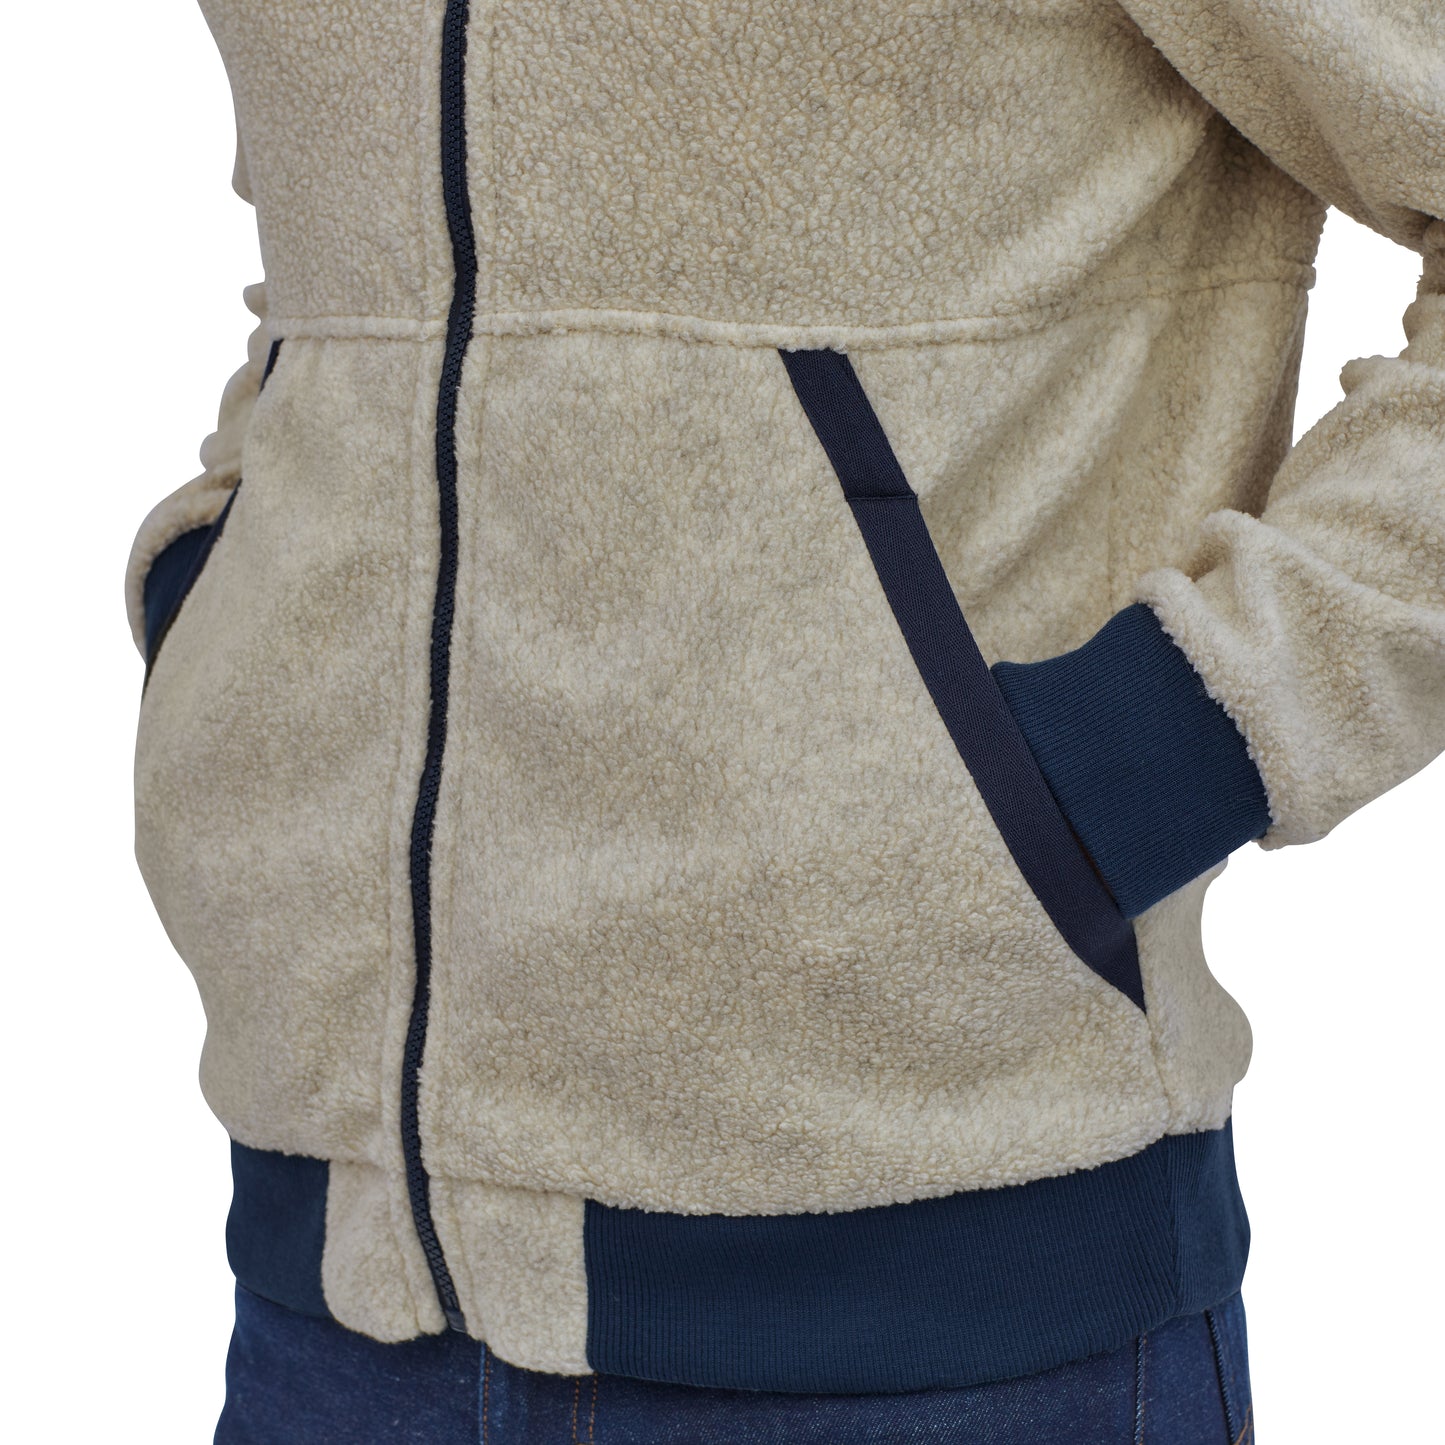 Patagonia Shearling Fleece Jacket